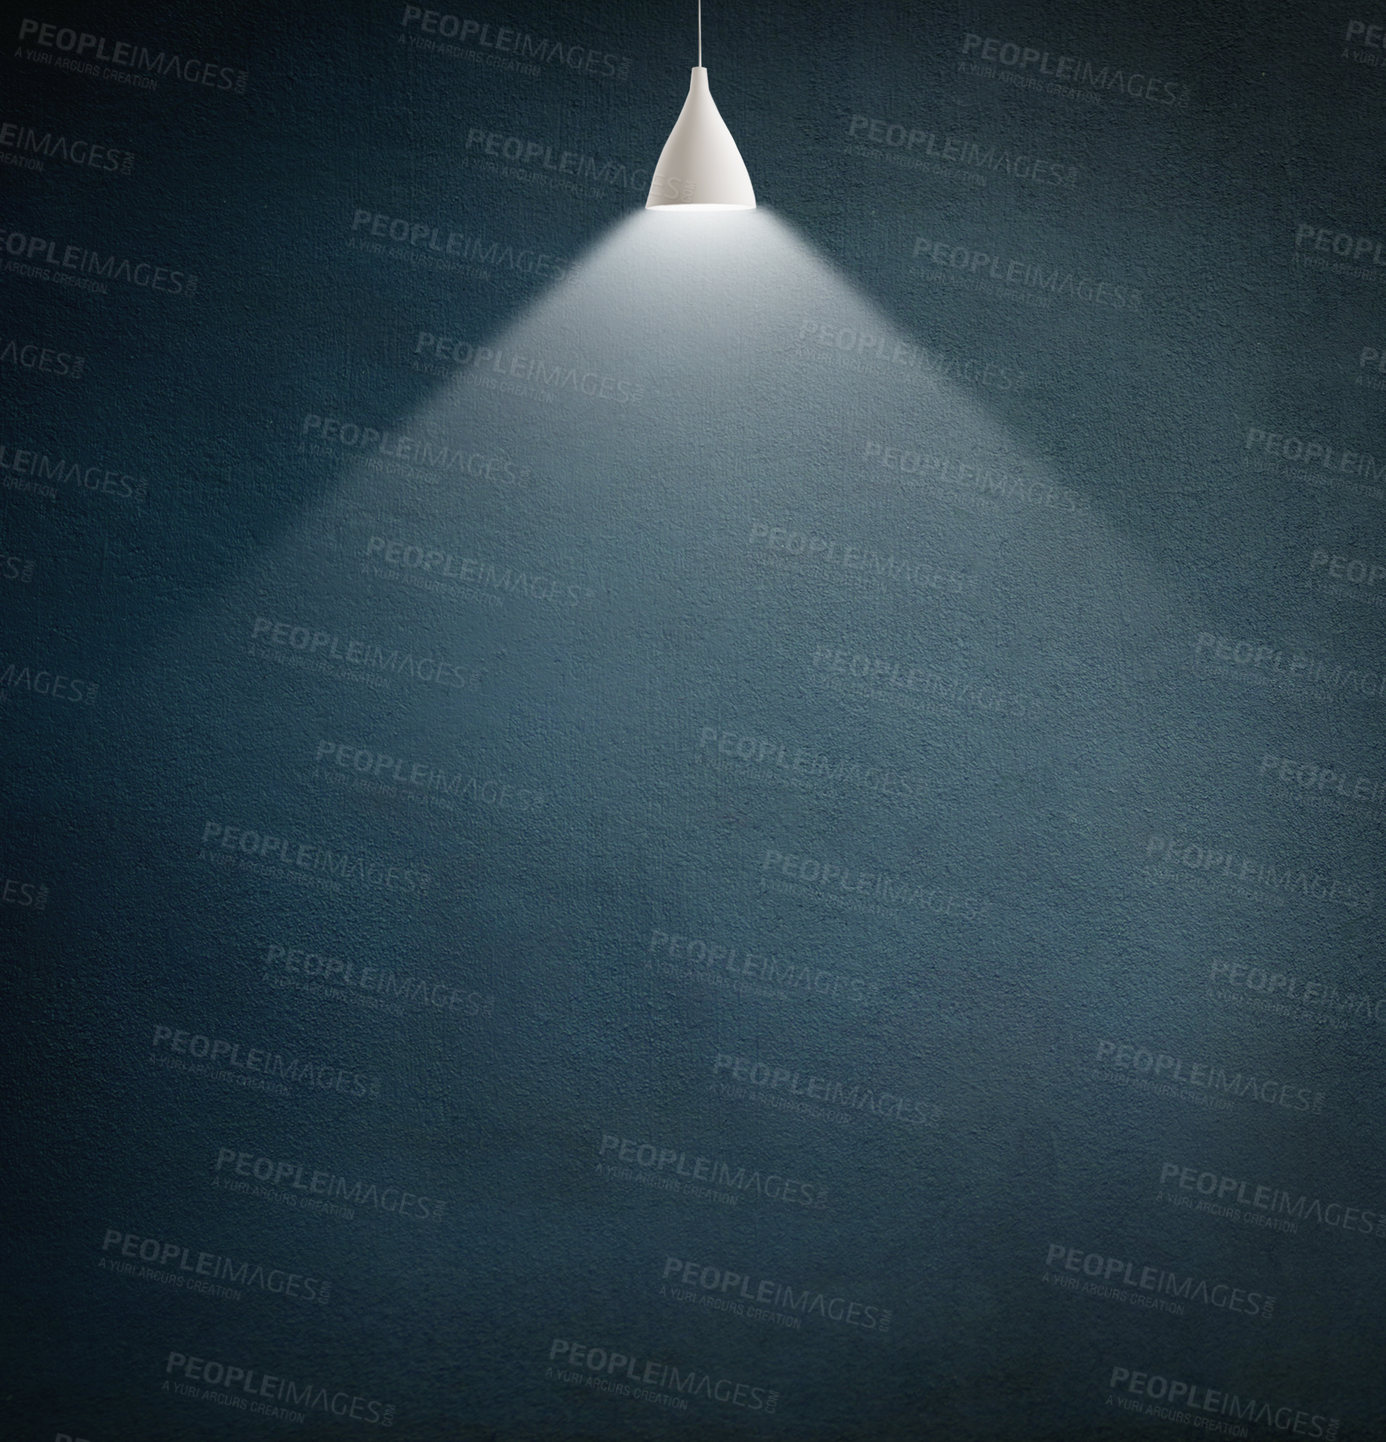 Buy stock photo CGI image of a hanging light illuminating the darkness